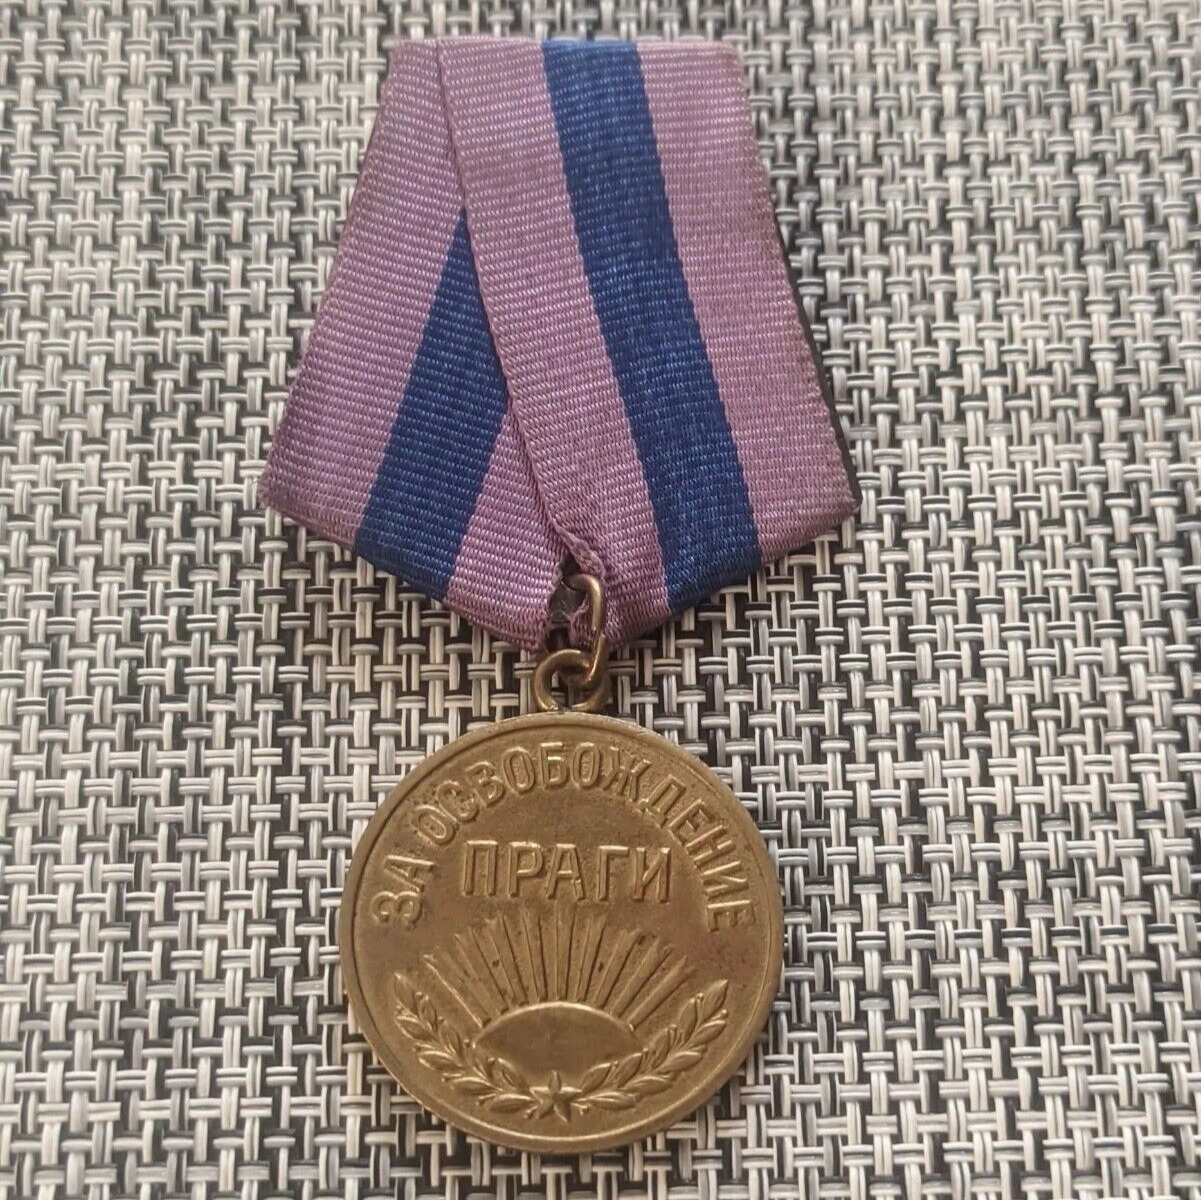 ORIGINAL WW2 Russian Soviet Medal FOR LIBERATION PRAGUE GREAT CONDITION